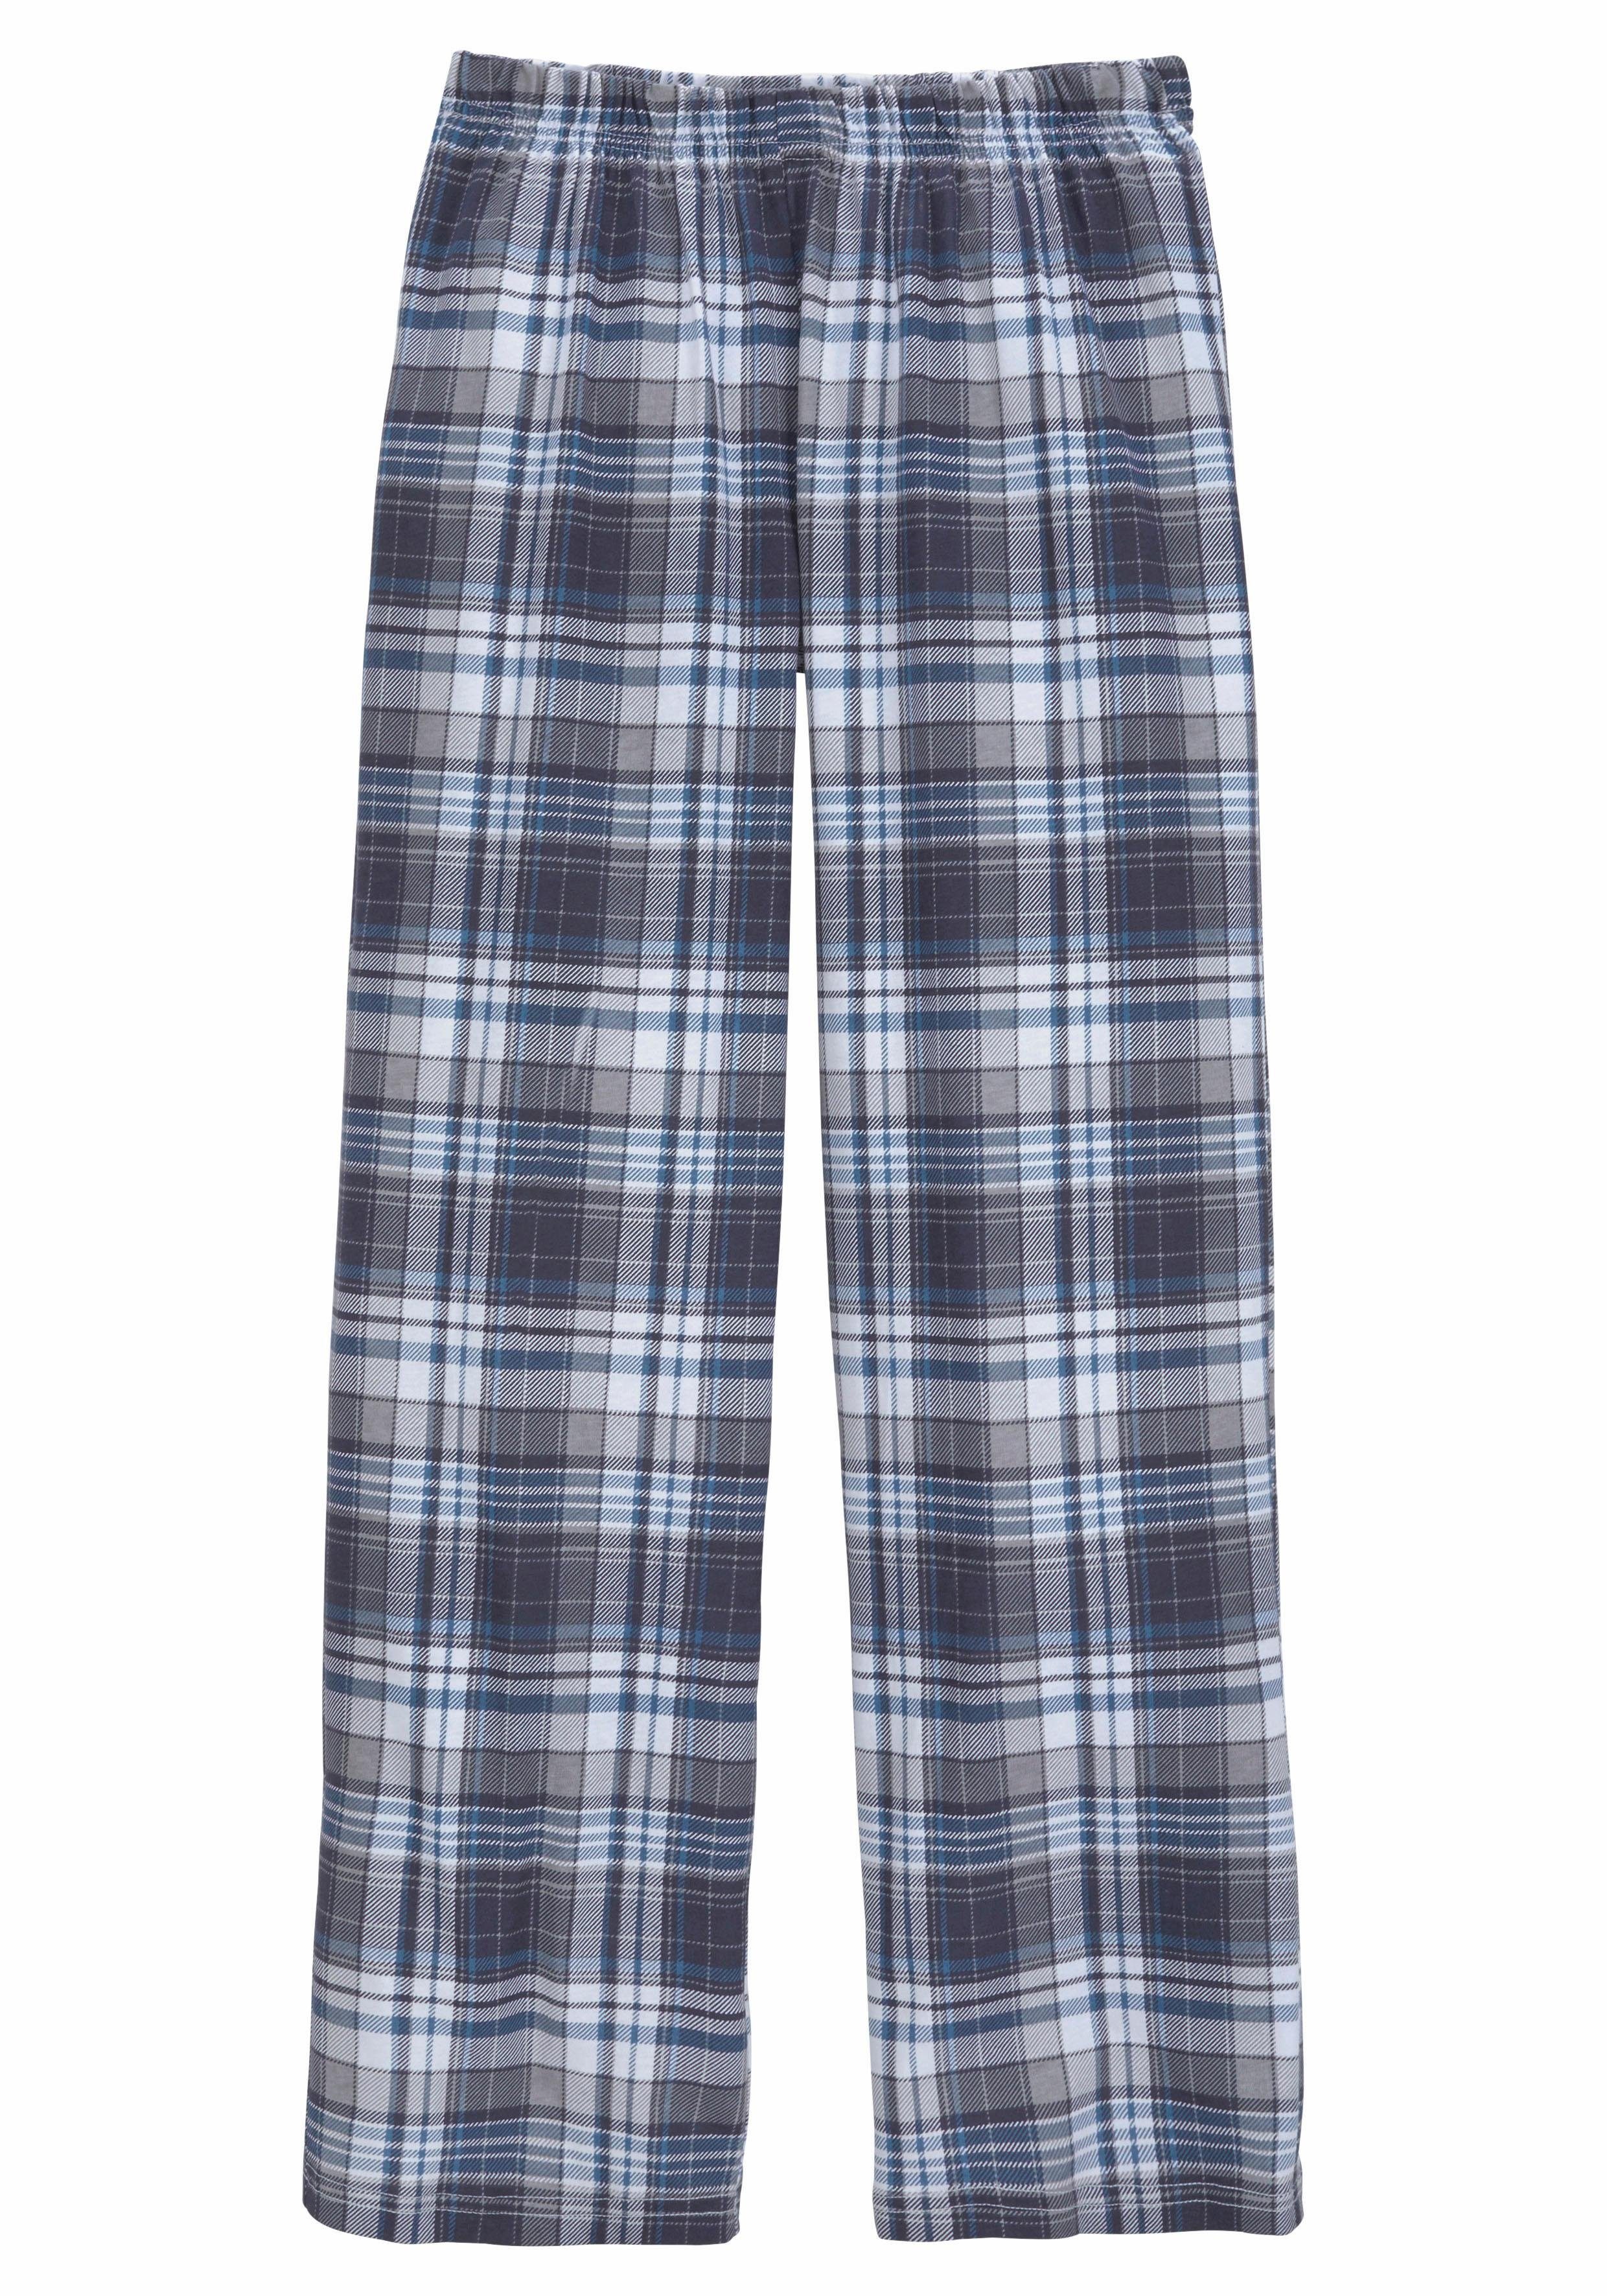 le jogger® Pyjama in langer Hose 1x uni 2 und tlg., 1x (Packung, 4 Stück) Form, kariert